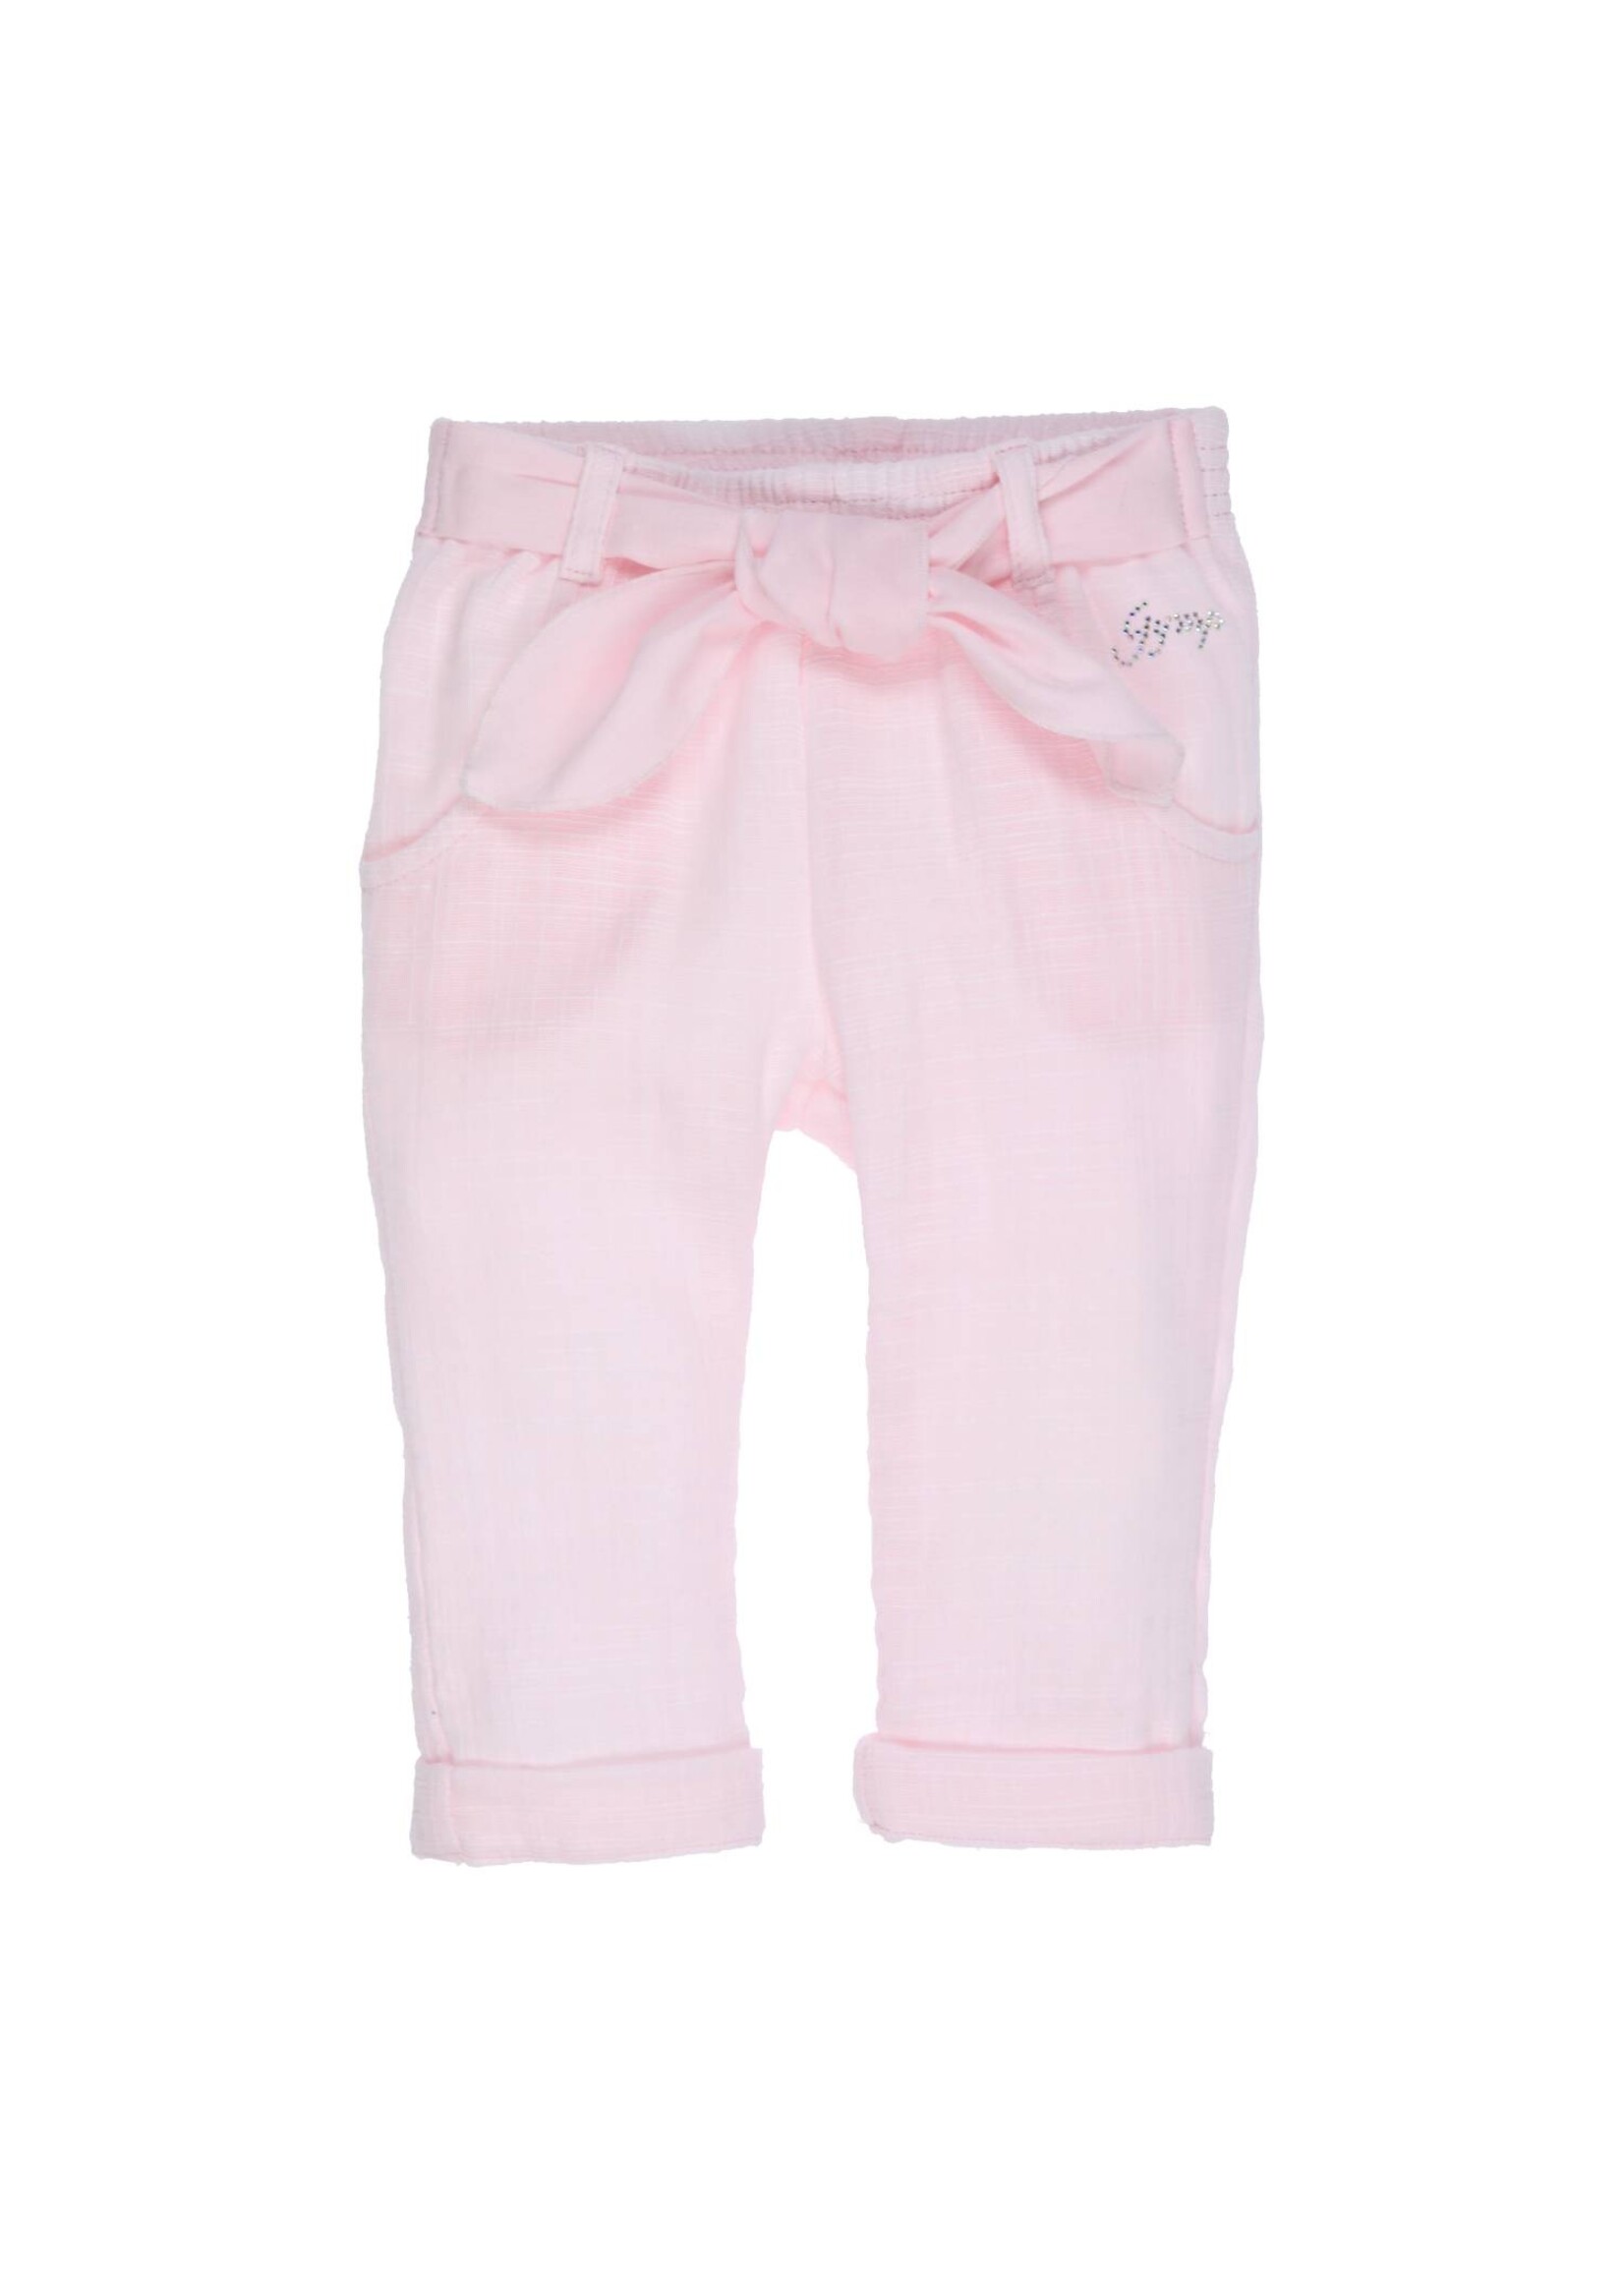 Gymp Girls Trousers Artemis 410-4363-10 Light Pink